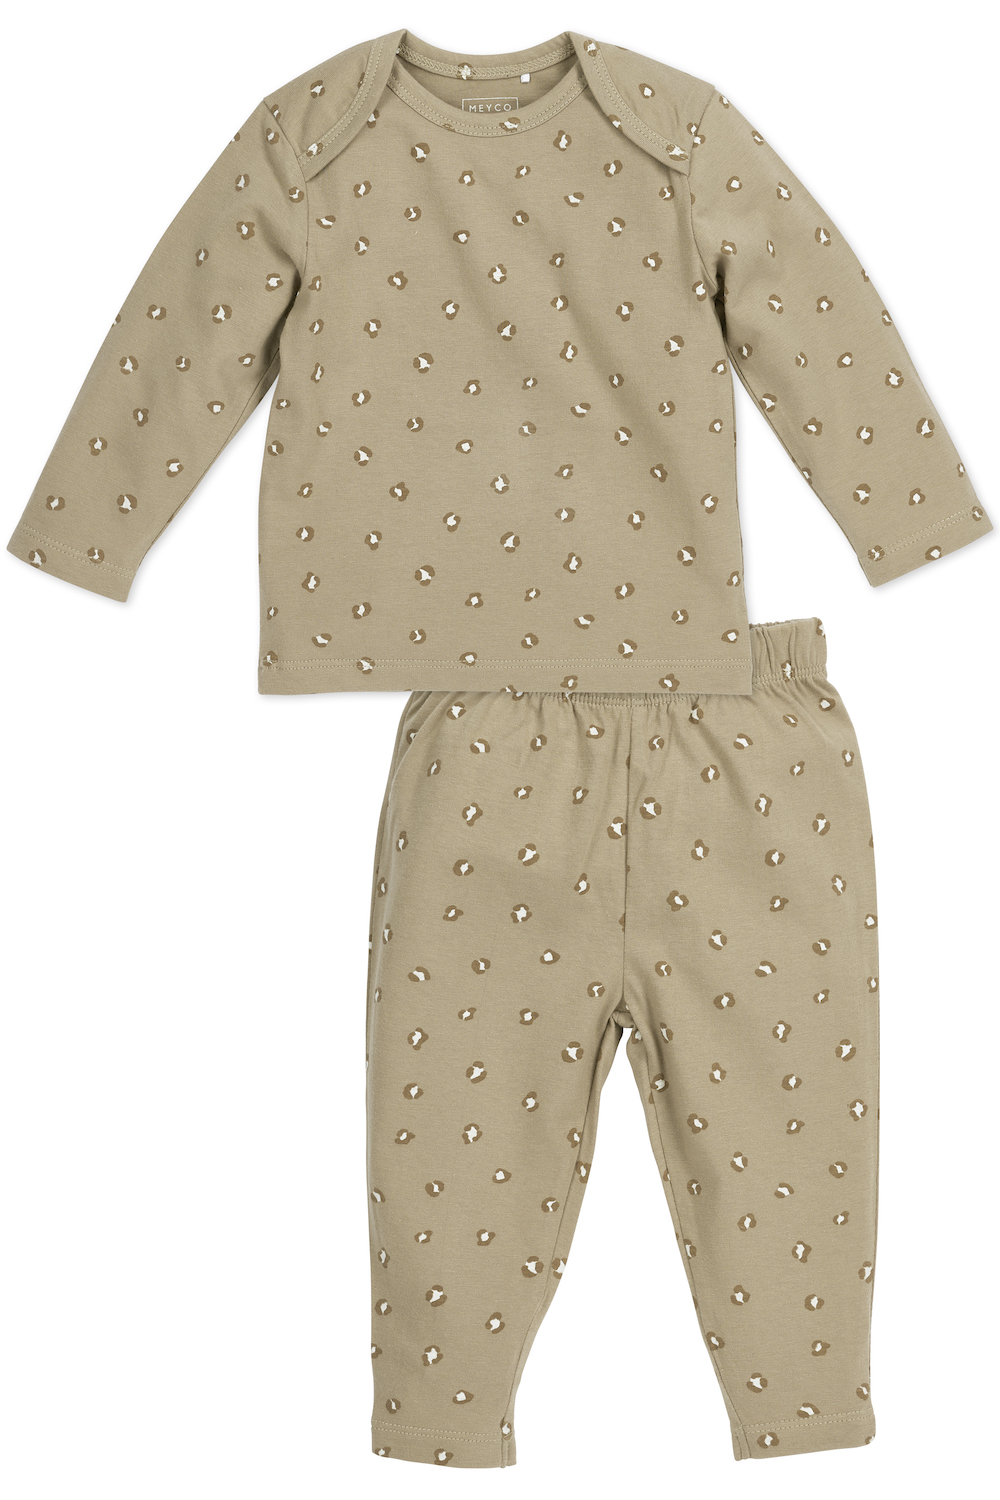 Baby Pyjama Mini Panther - sand - 74/80